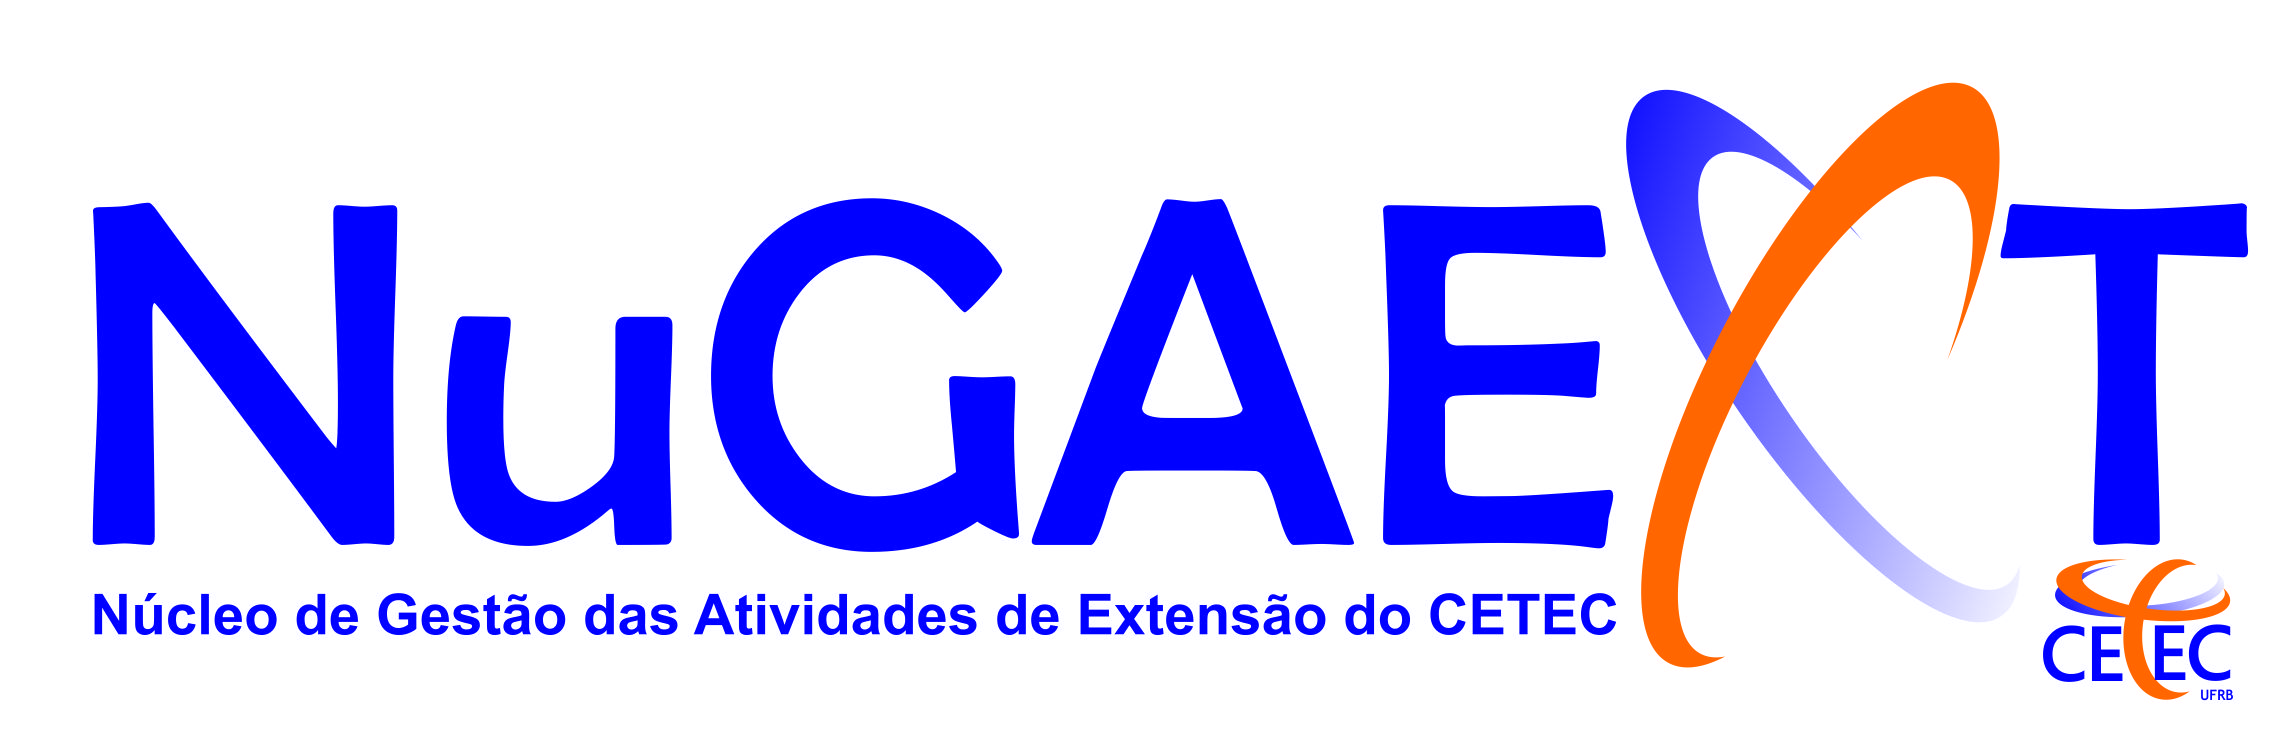 nugaext logo